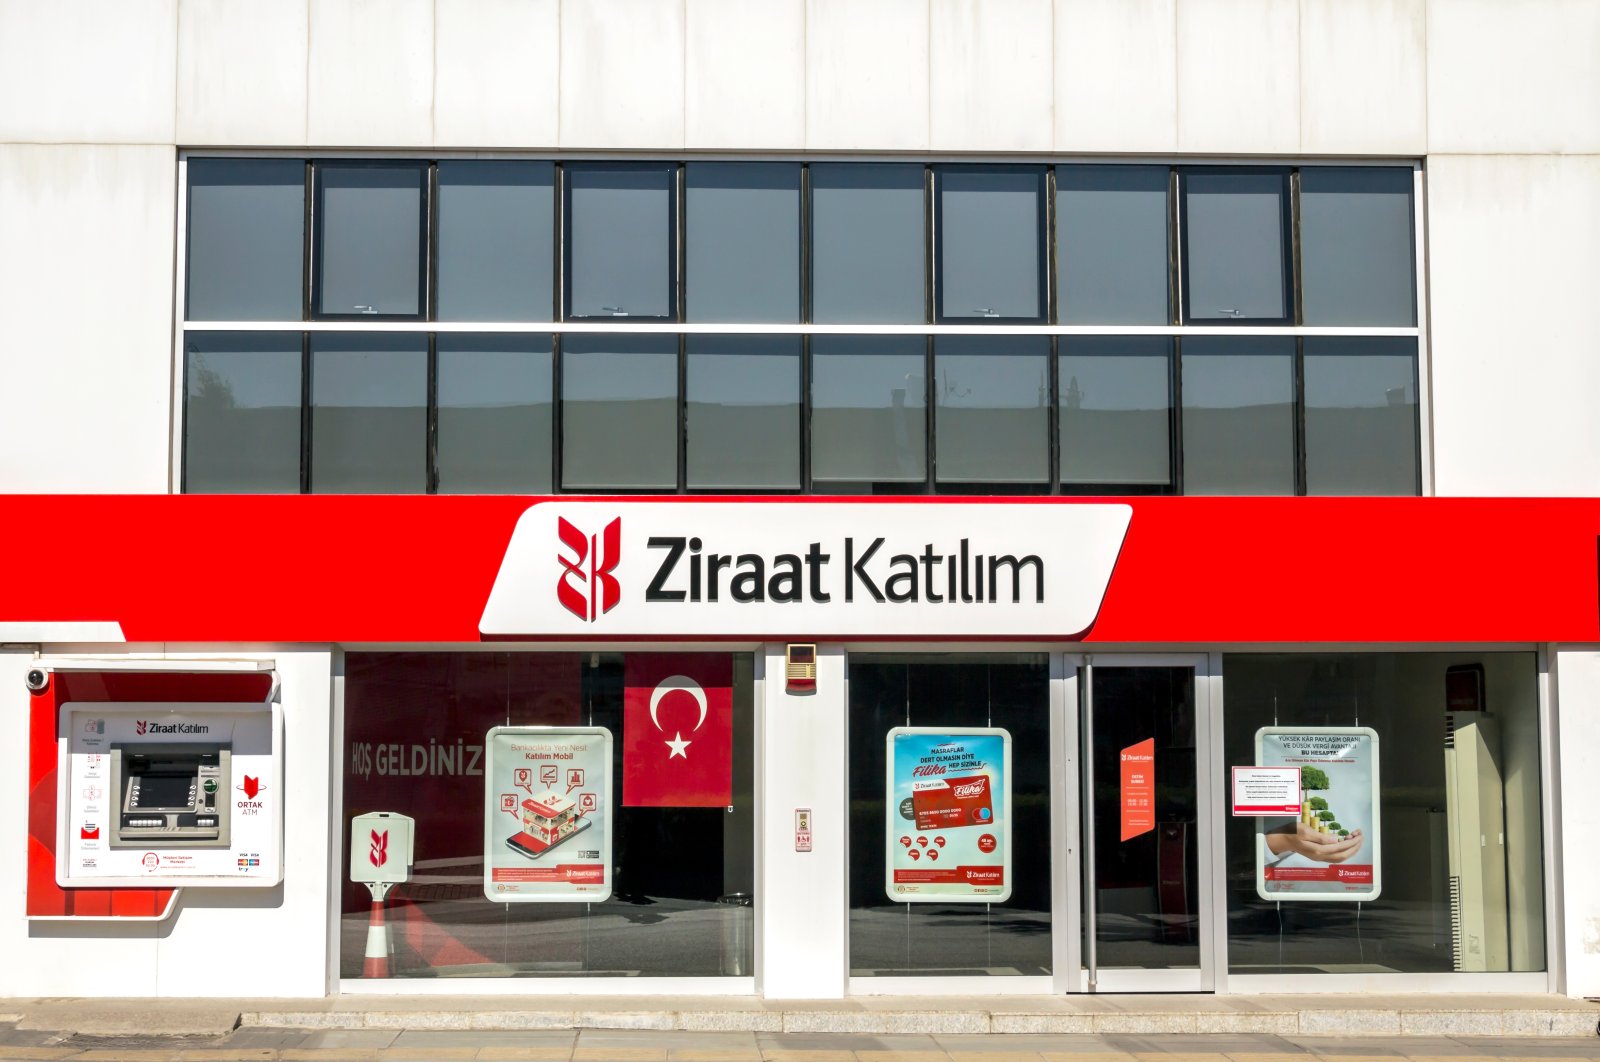 A branch of Ziraat Katılım participation bank is seen in Ankara, Turkey, Aug. 23, 2018. (Shutterstock Photo)